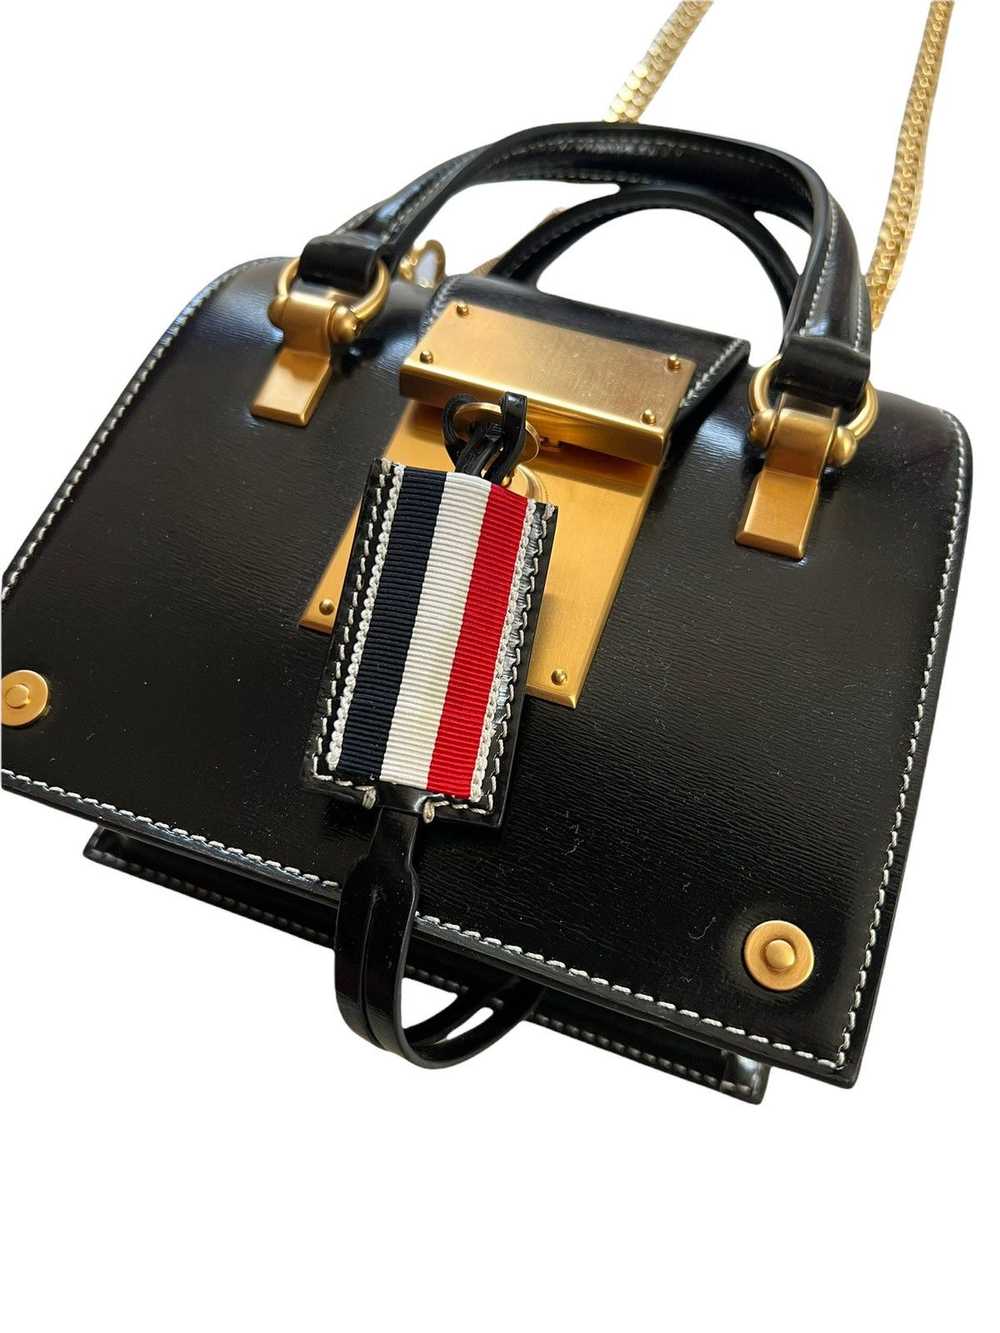 Thom Browne $5,100 Mrs. Thom Chain Crossbody Bag - image 5